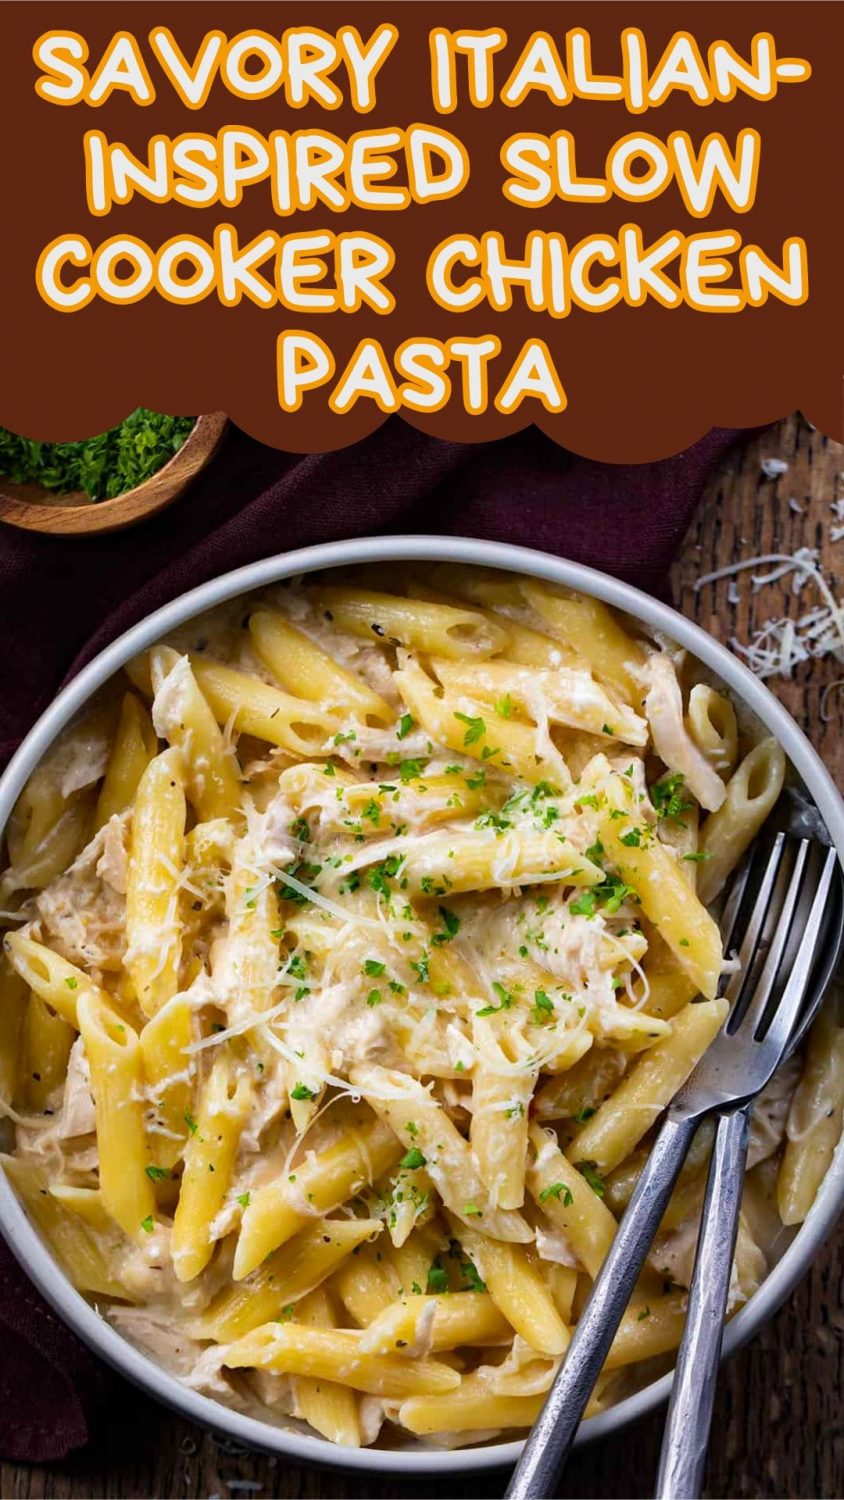 Savory Italian-Inspired Slow Cooker Chicken Pasta